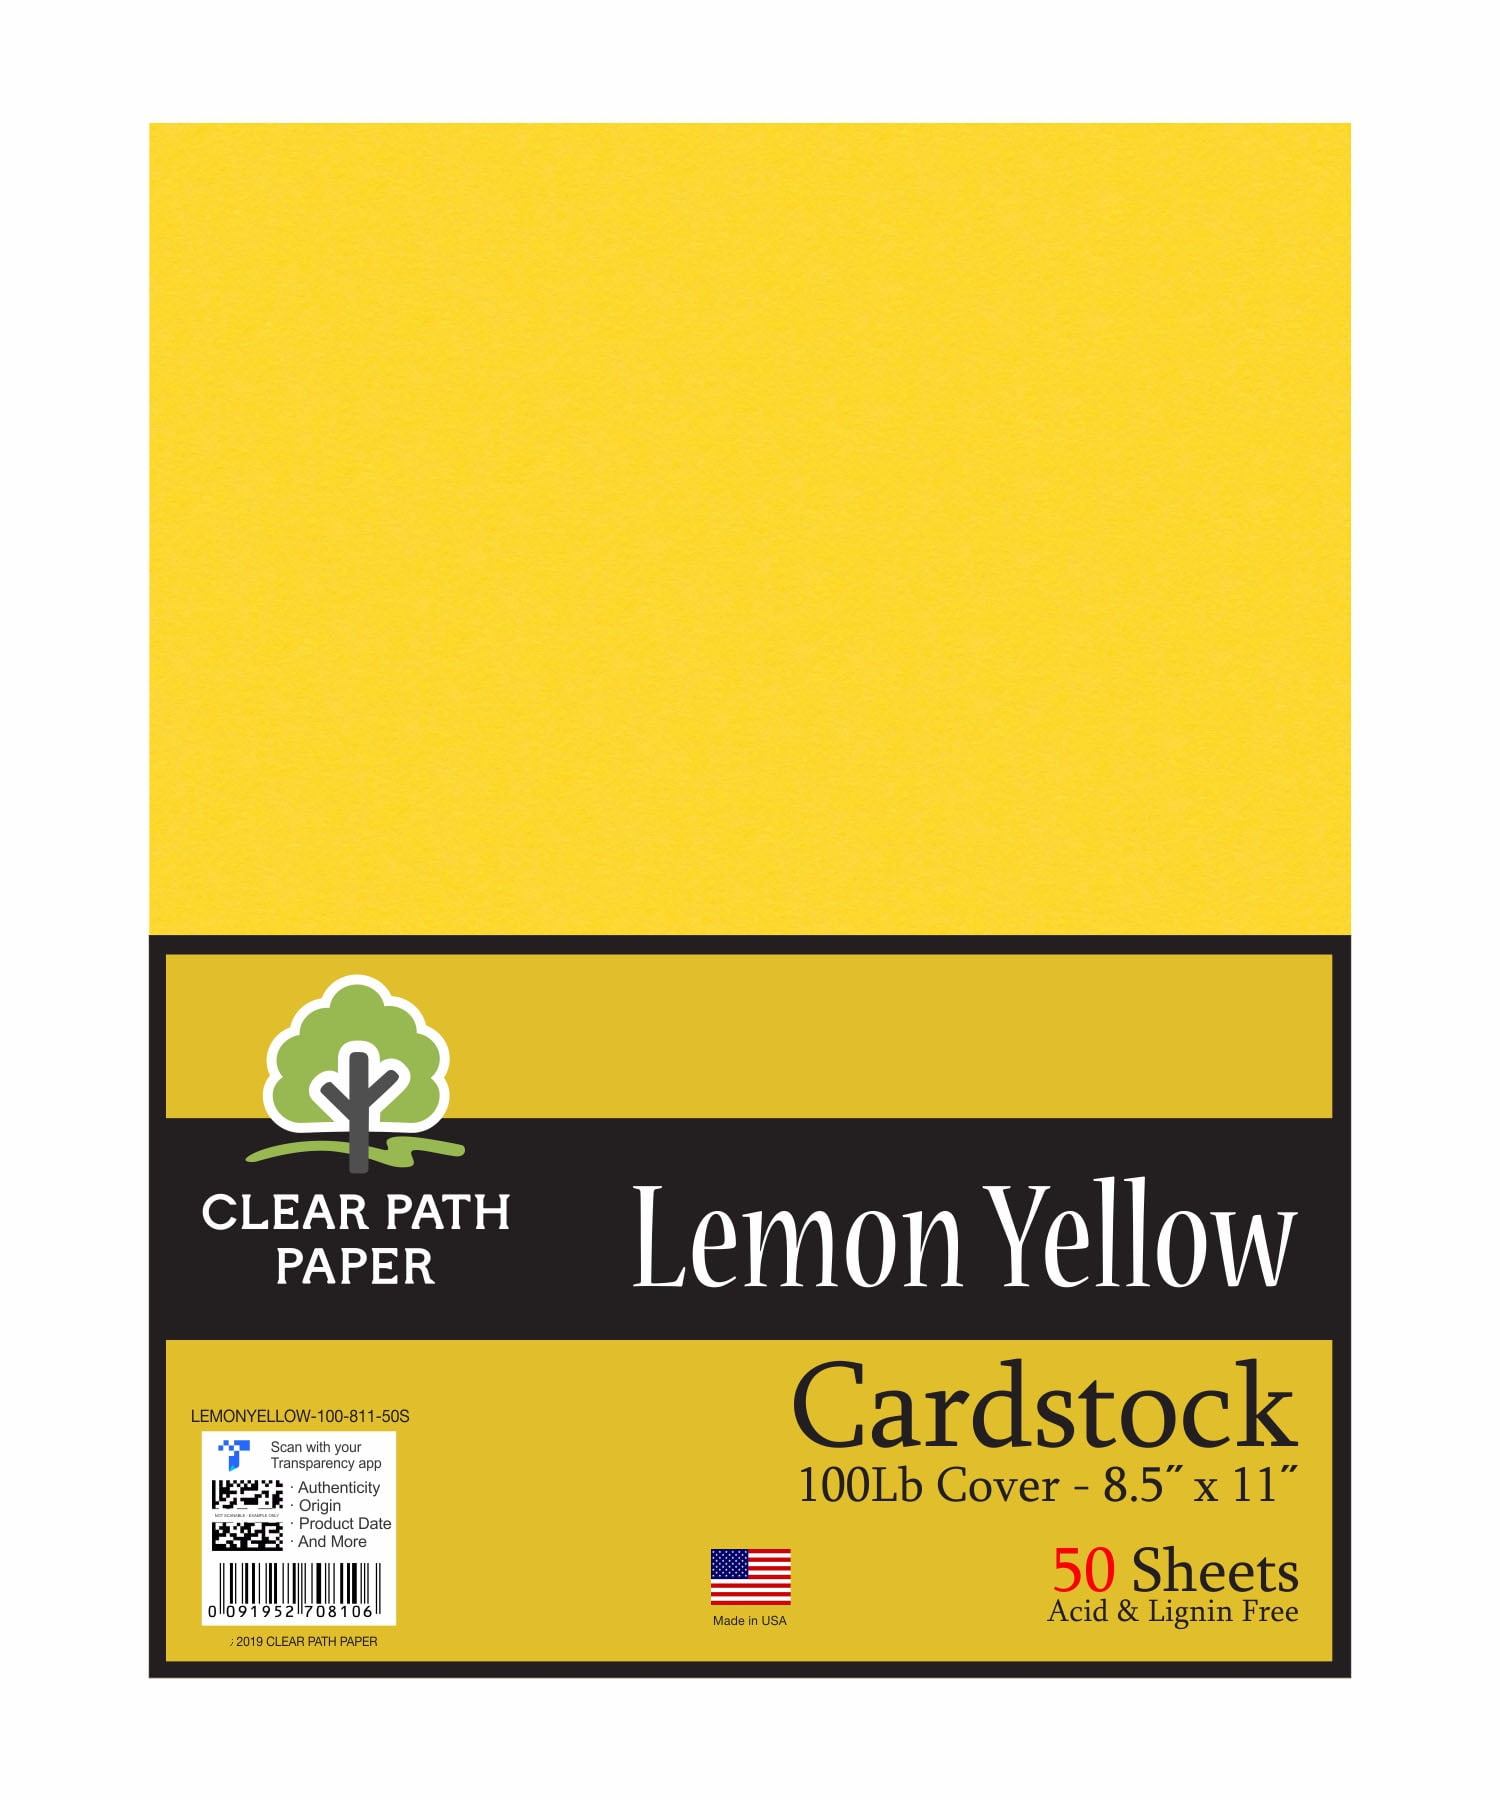 Lemon Yellow Cardstock - 8.5 x 11 inch - 100Lb Cover - 50 Sheets